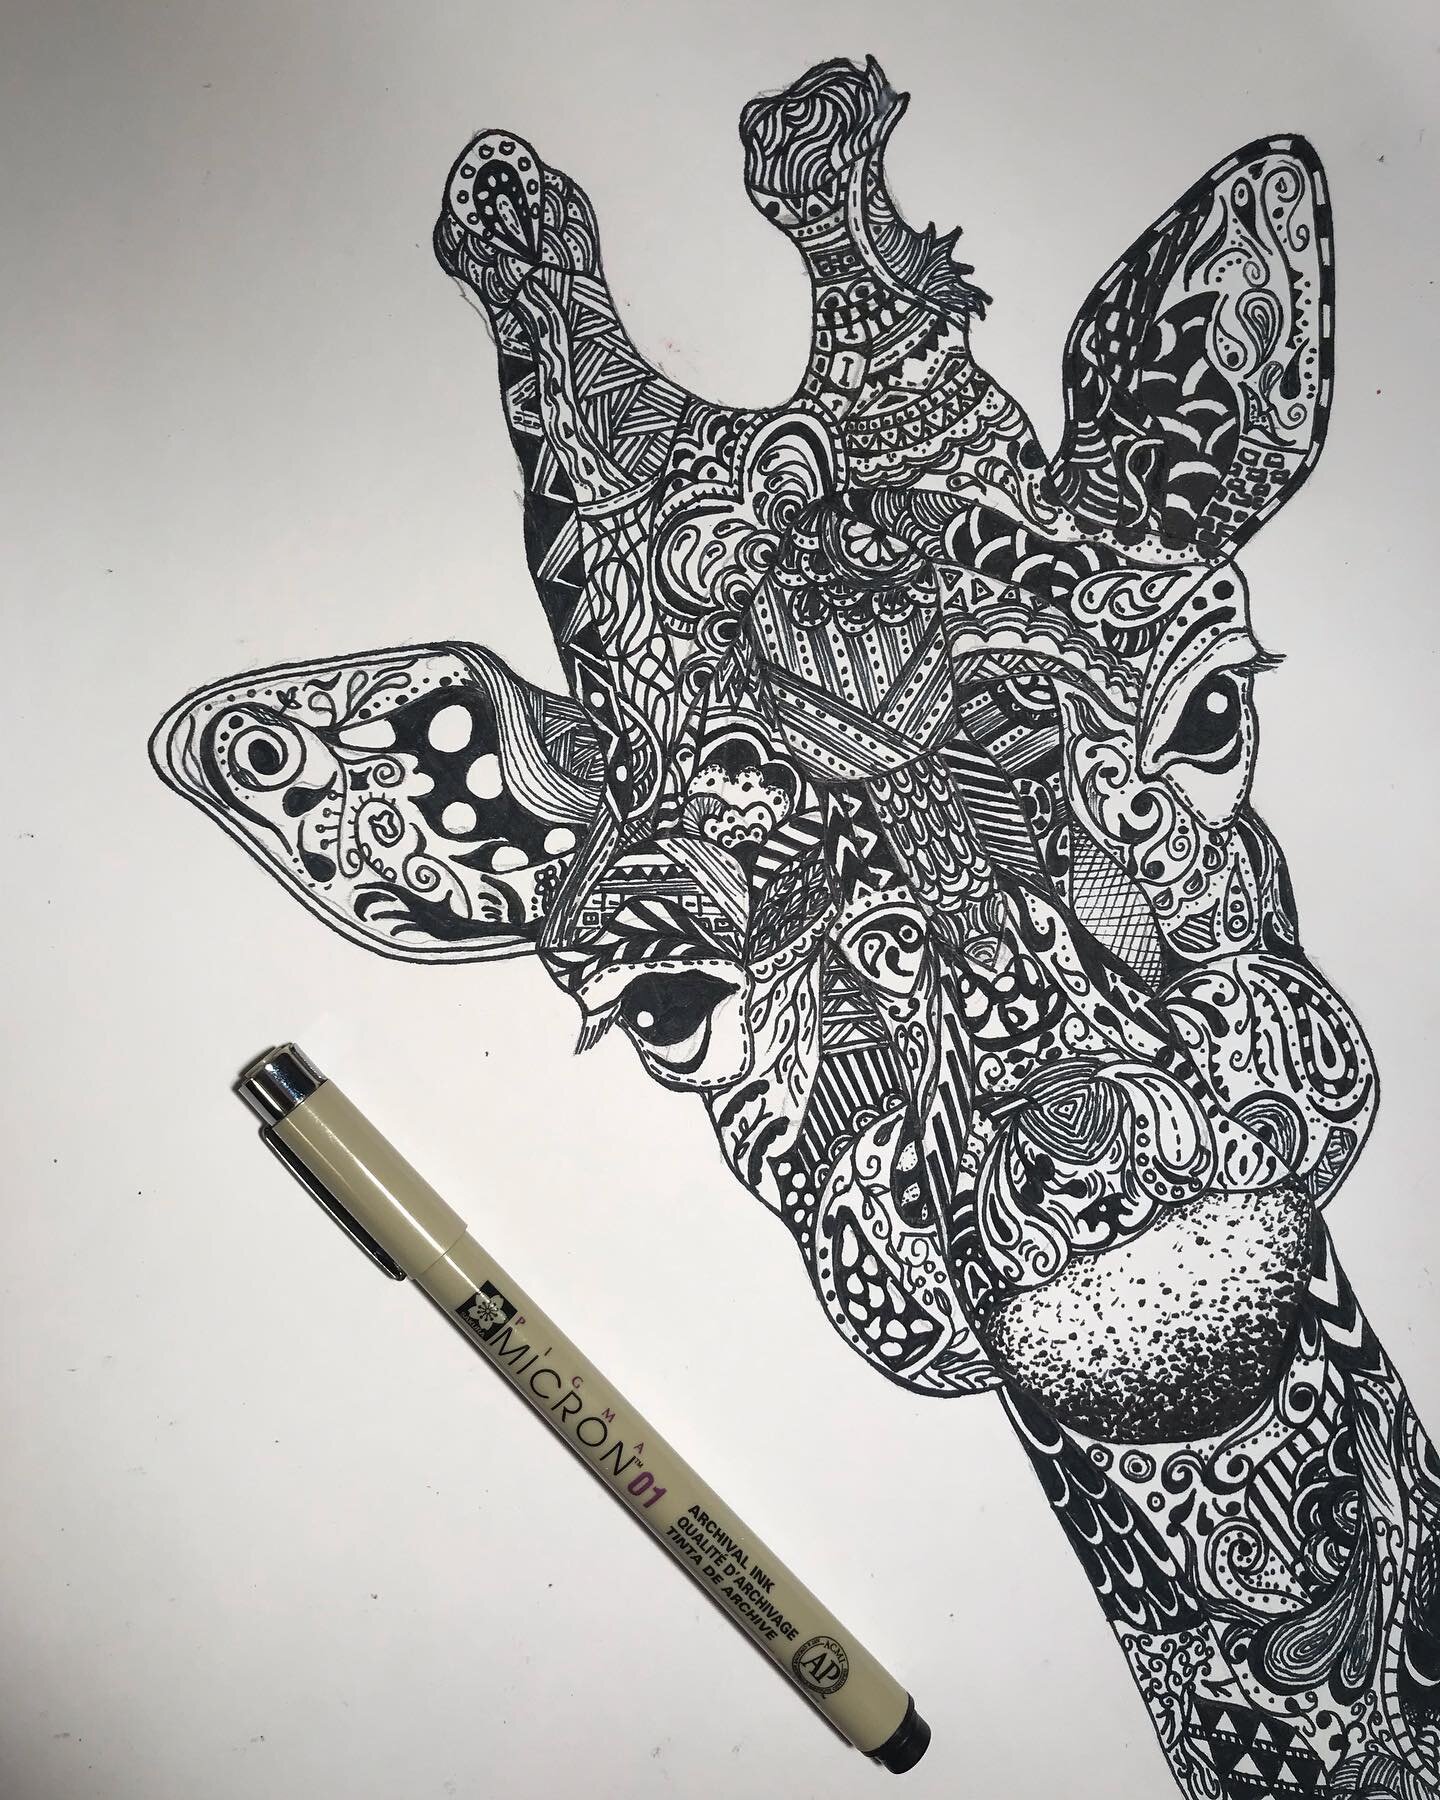 I went through an animal pattern phase at one point🦒😸 #pendrawing #giraffe #giraffeart #pigmamicron #pigmamicronpens #patternart #penart #penartwork #artistsoninstagram #artist #instagramart #detailart @sakuraofamerica